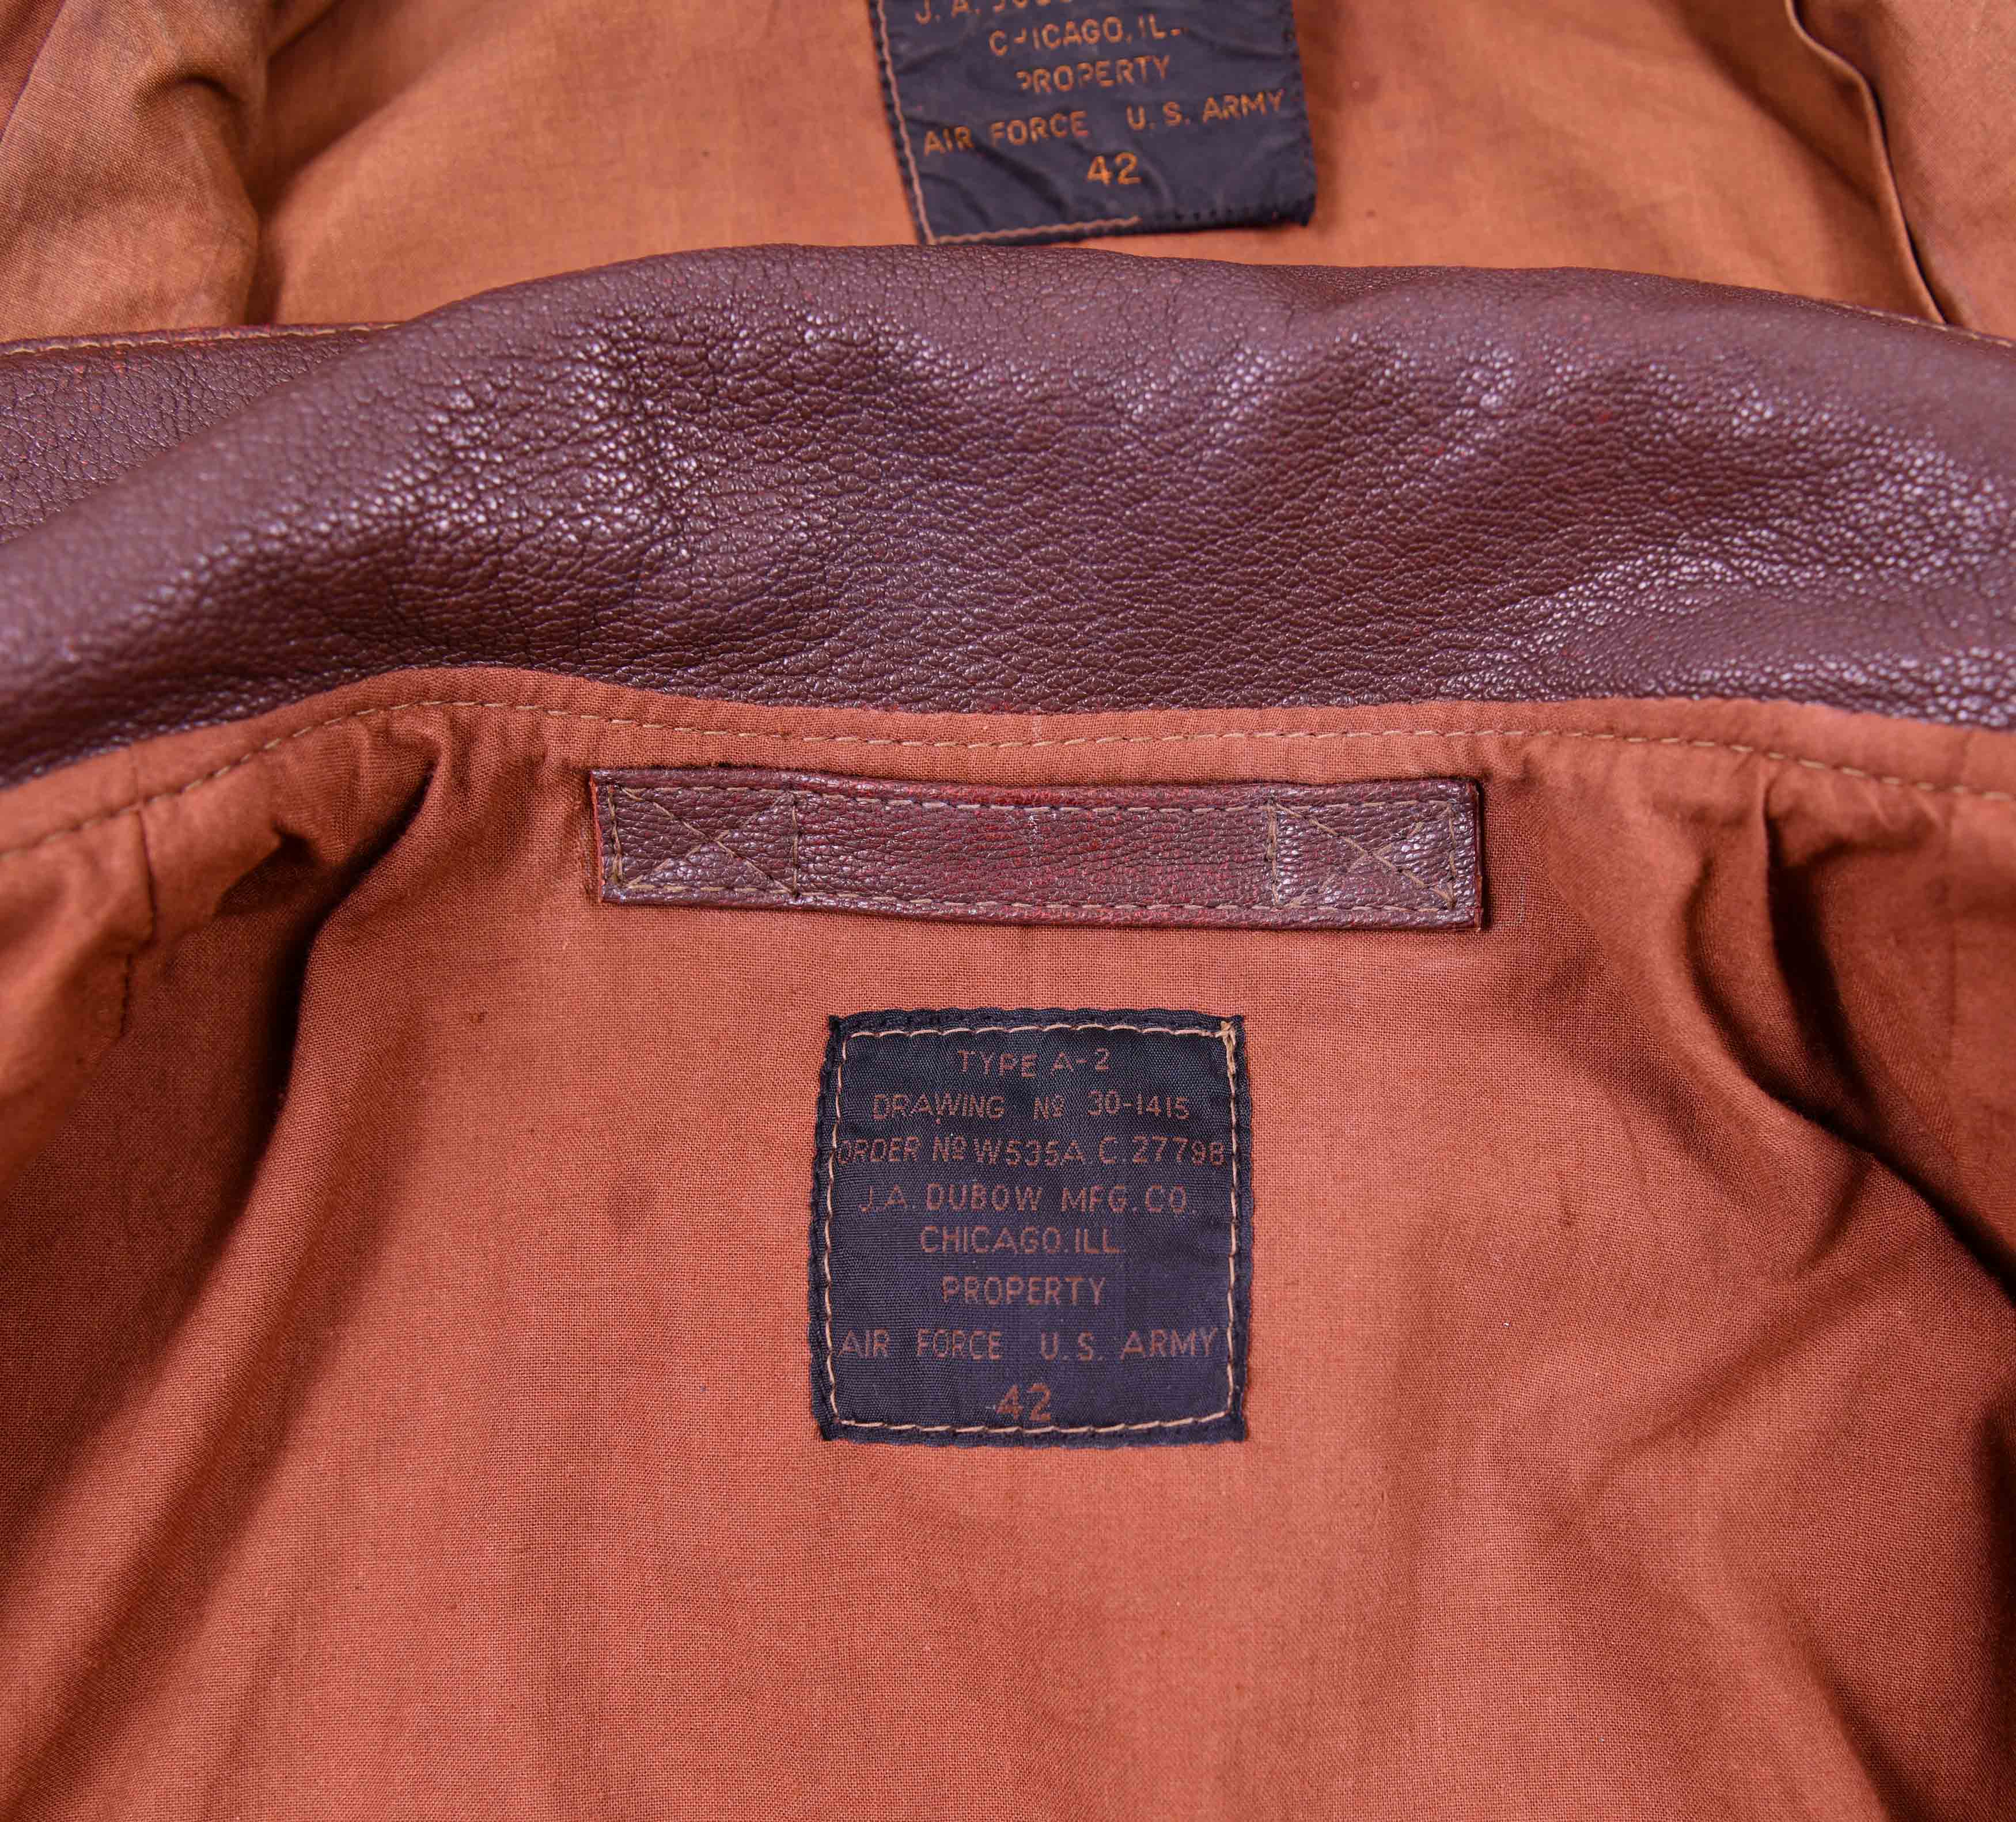 J. A. Dubow 27798 – Fivestar Leather